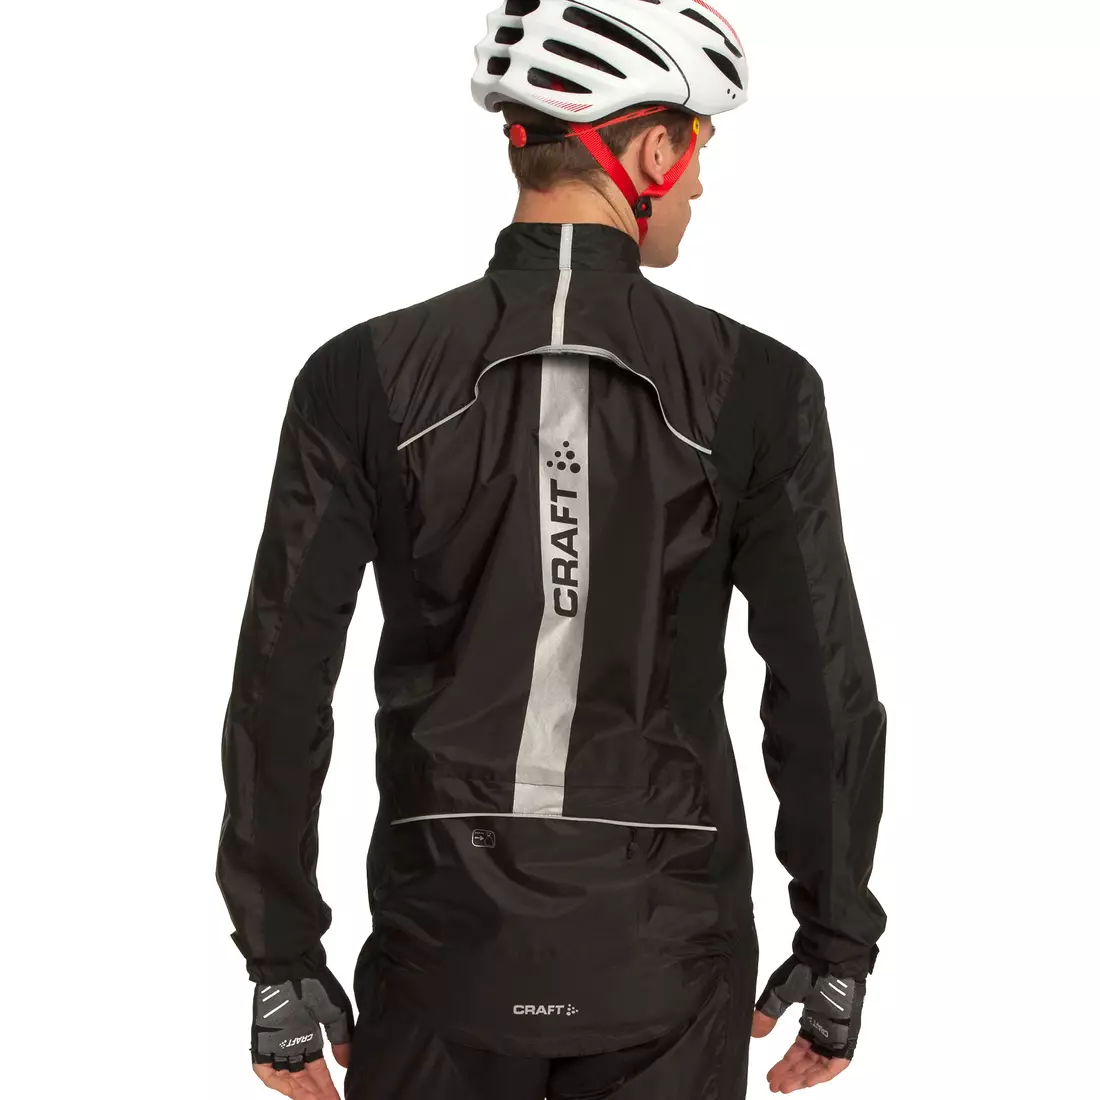 CRAFT PERFORMANCE BIKE - ultralehká pánská cyklistická bunda 1902577-9999, barva: černá